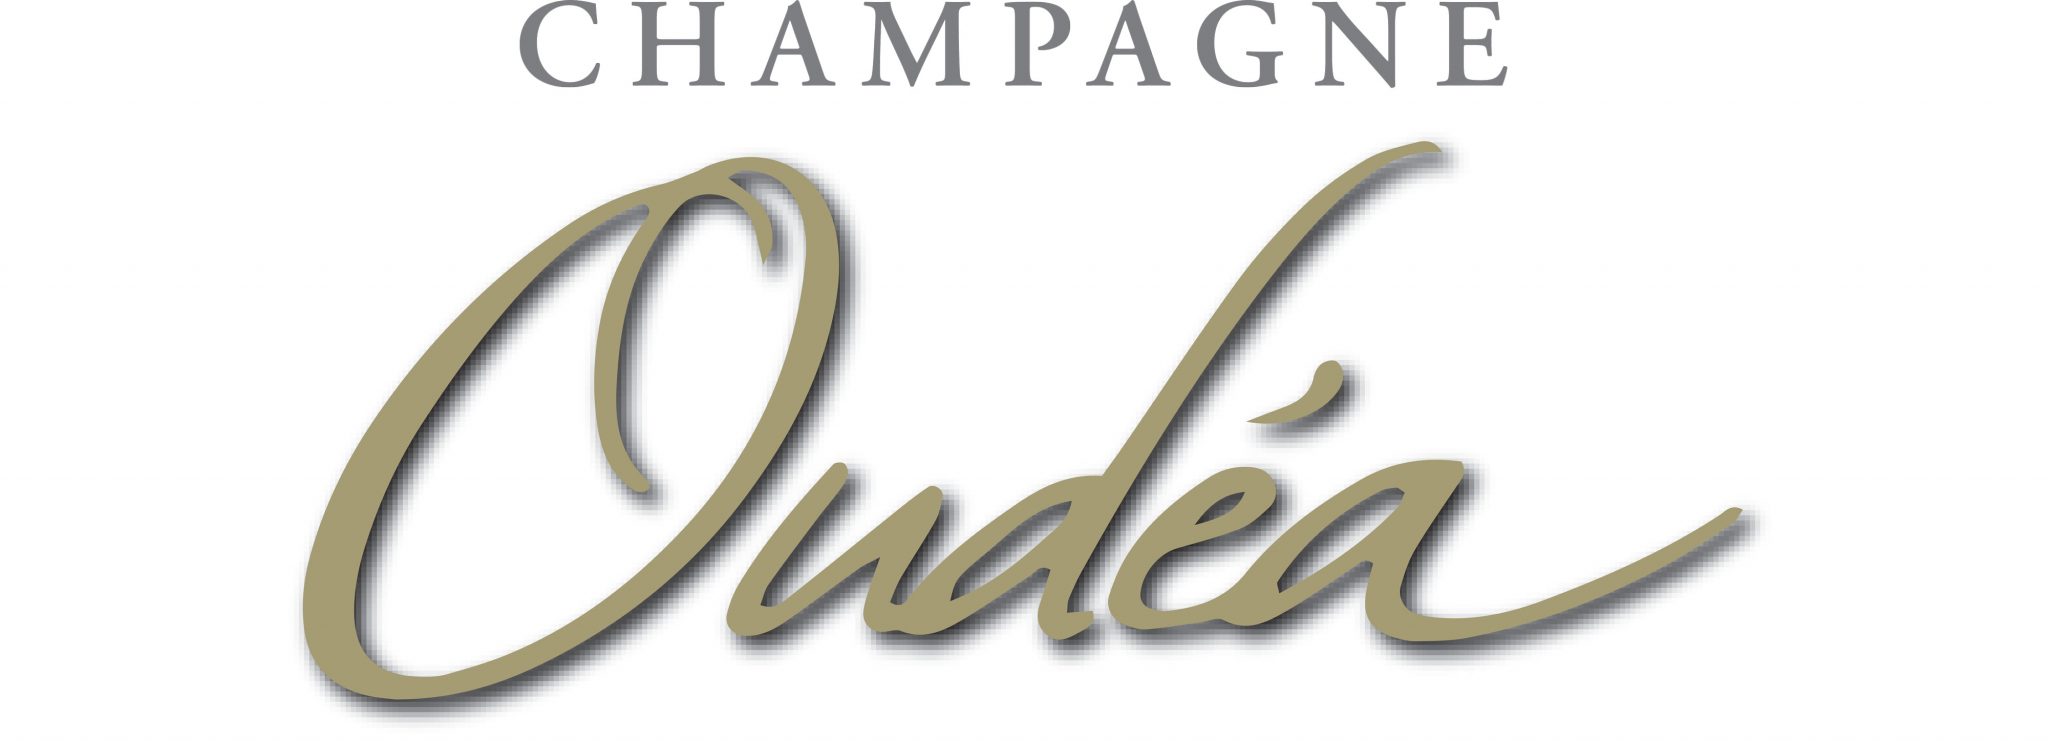 Champagne Robert Oudéa & Fils